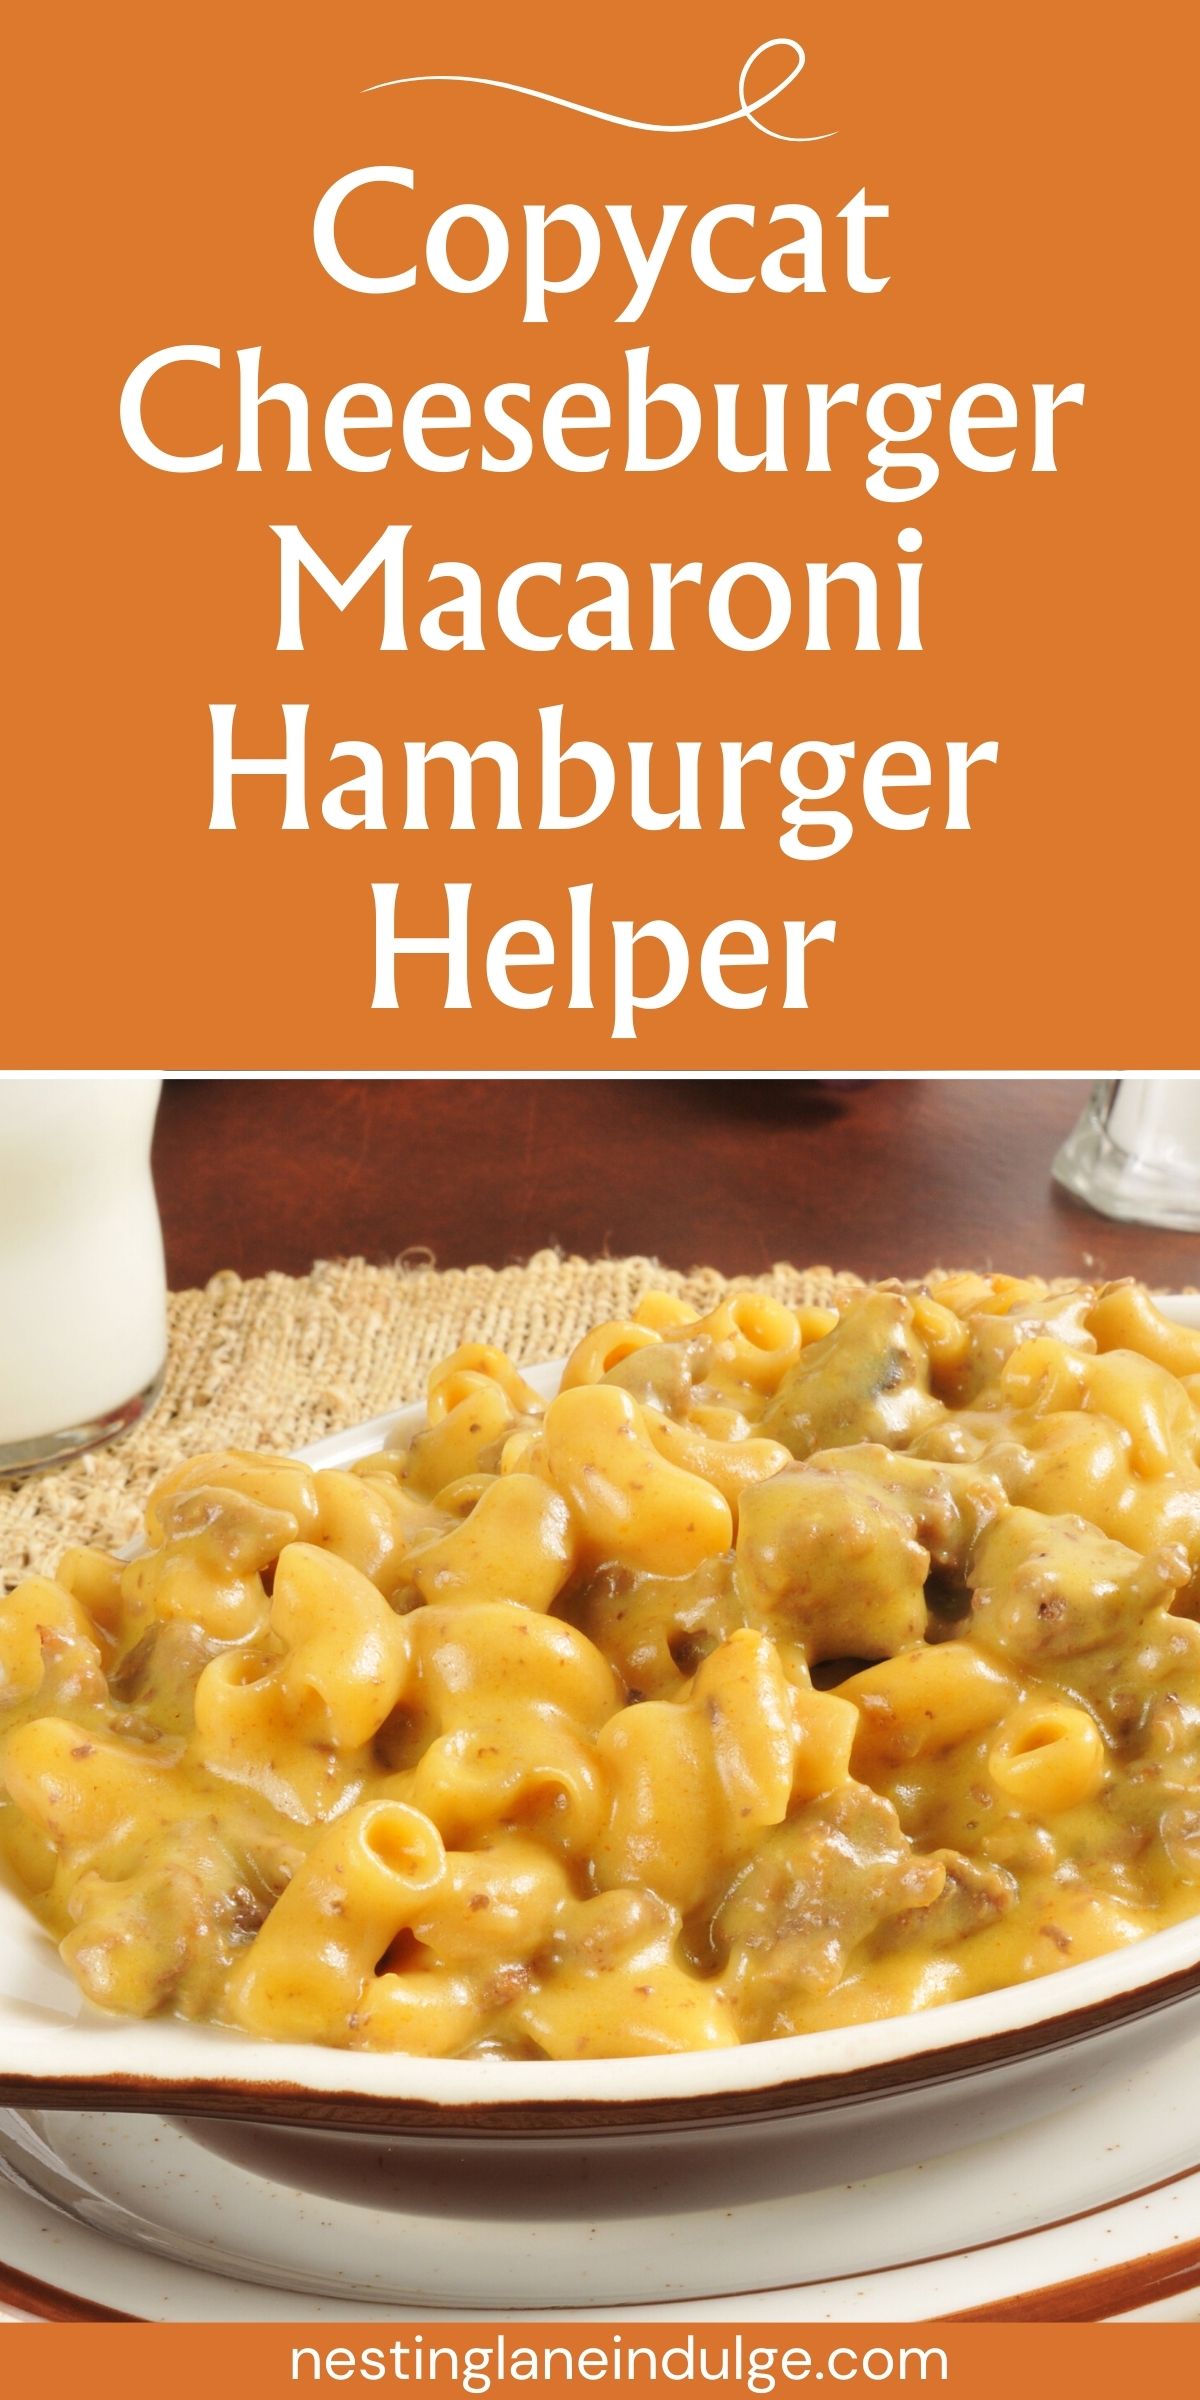 Graphic for Pinterest of Copycat Cheeseburger Macaroni Hamburger Helper Recipe.